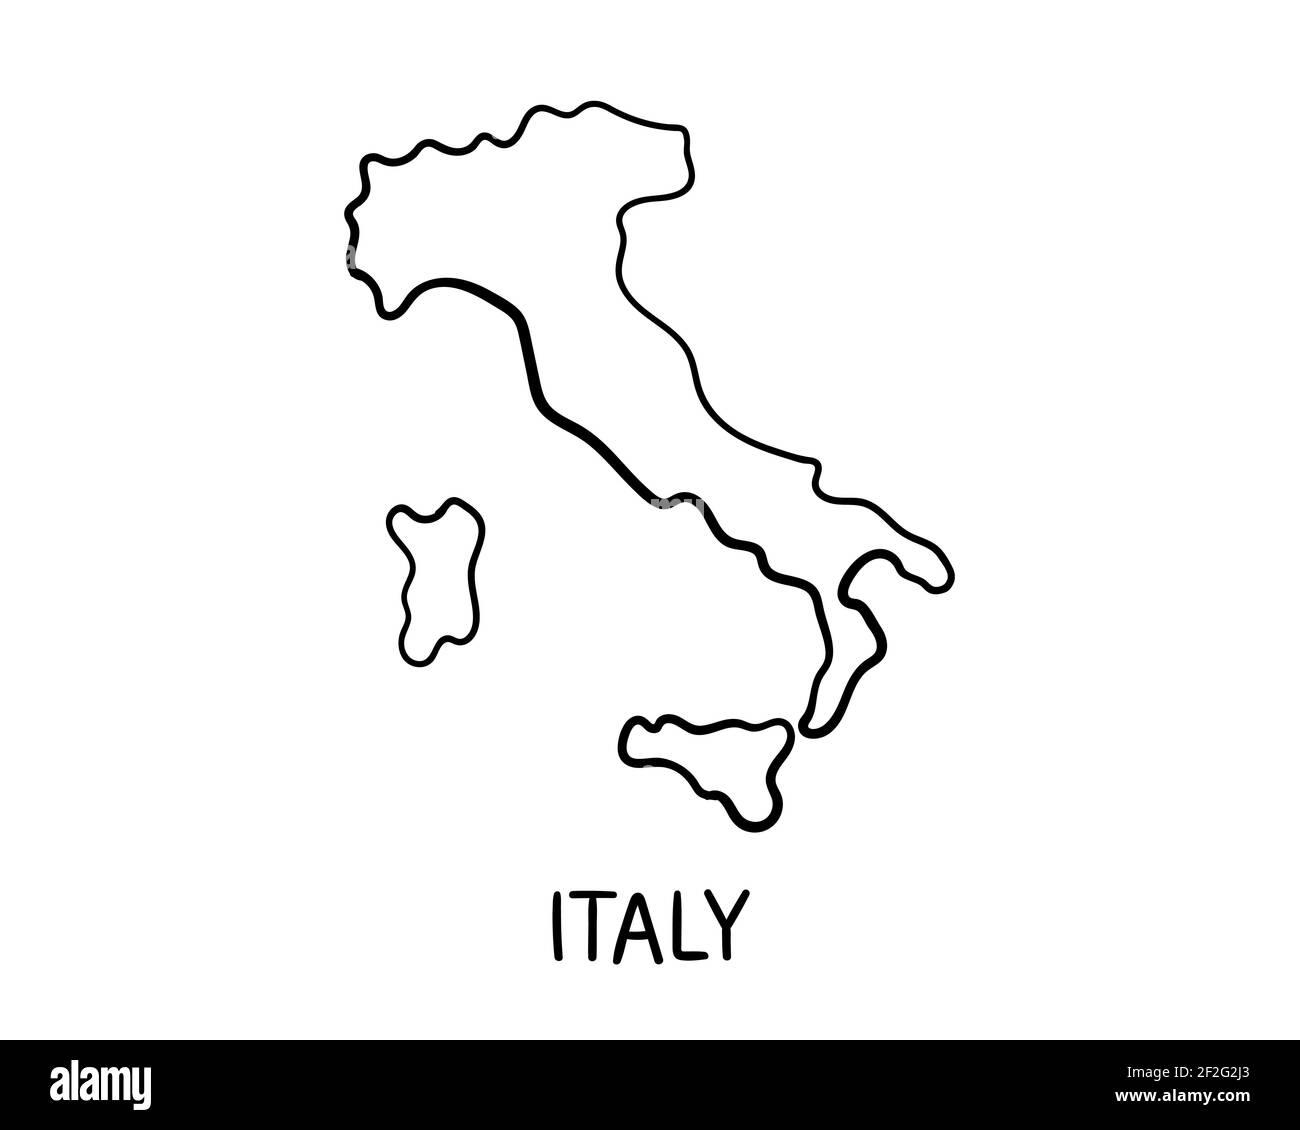 Italy Map - Hand Drawn Illustration Stock Photo